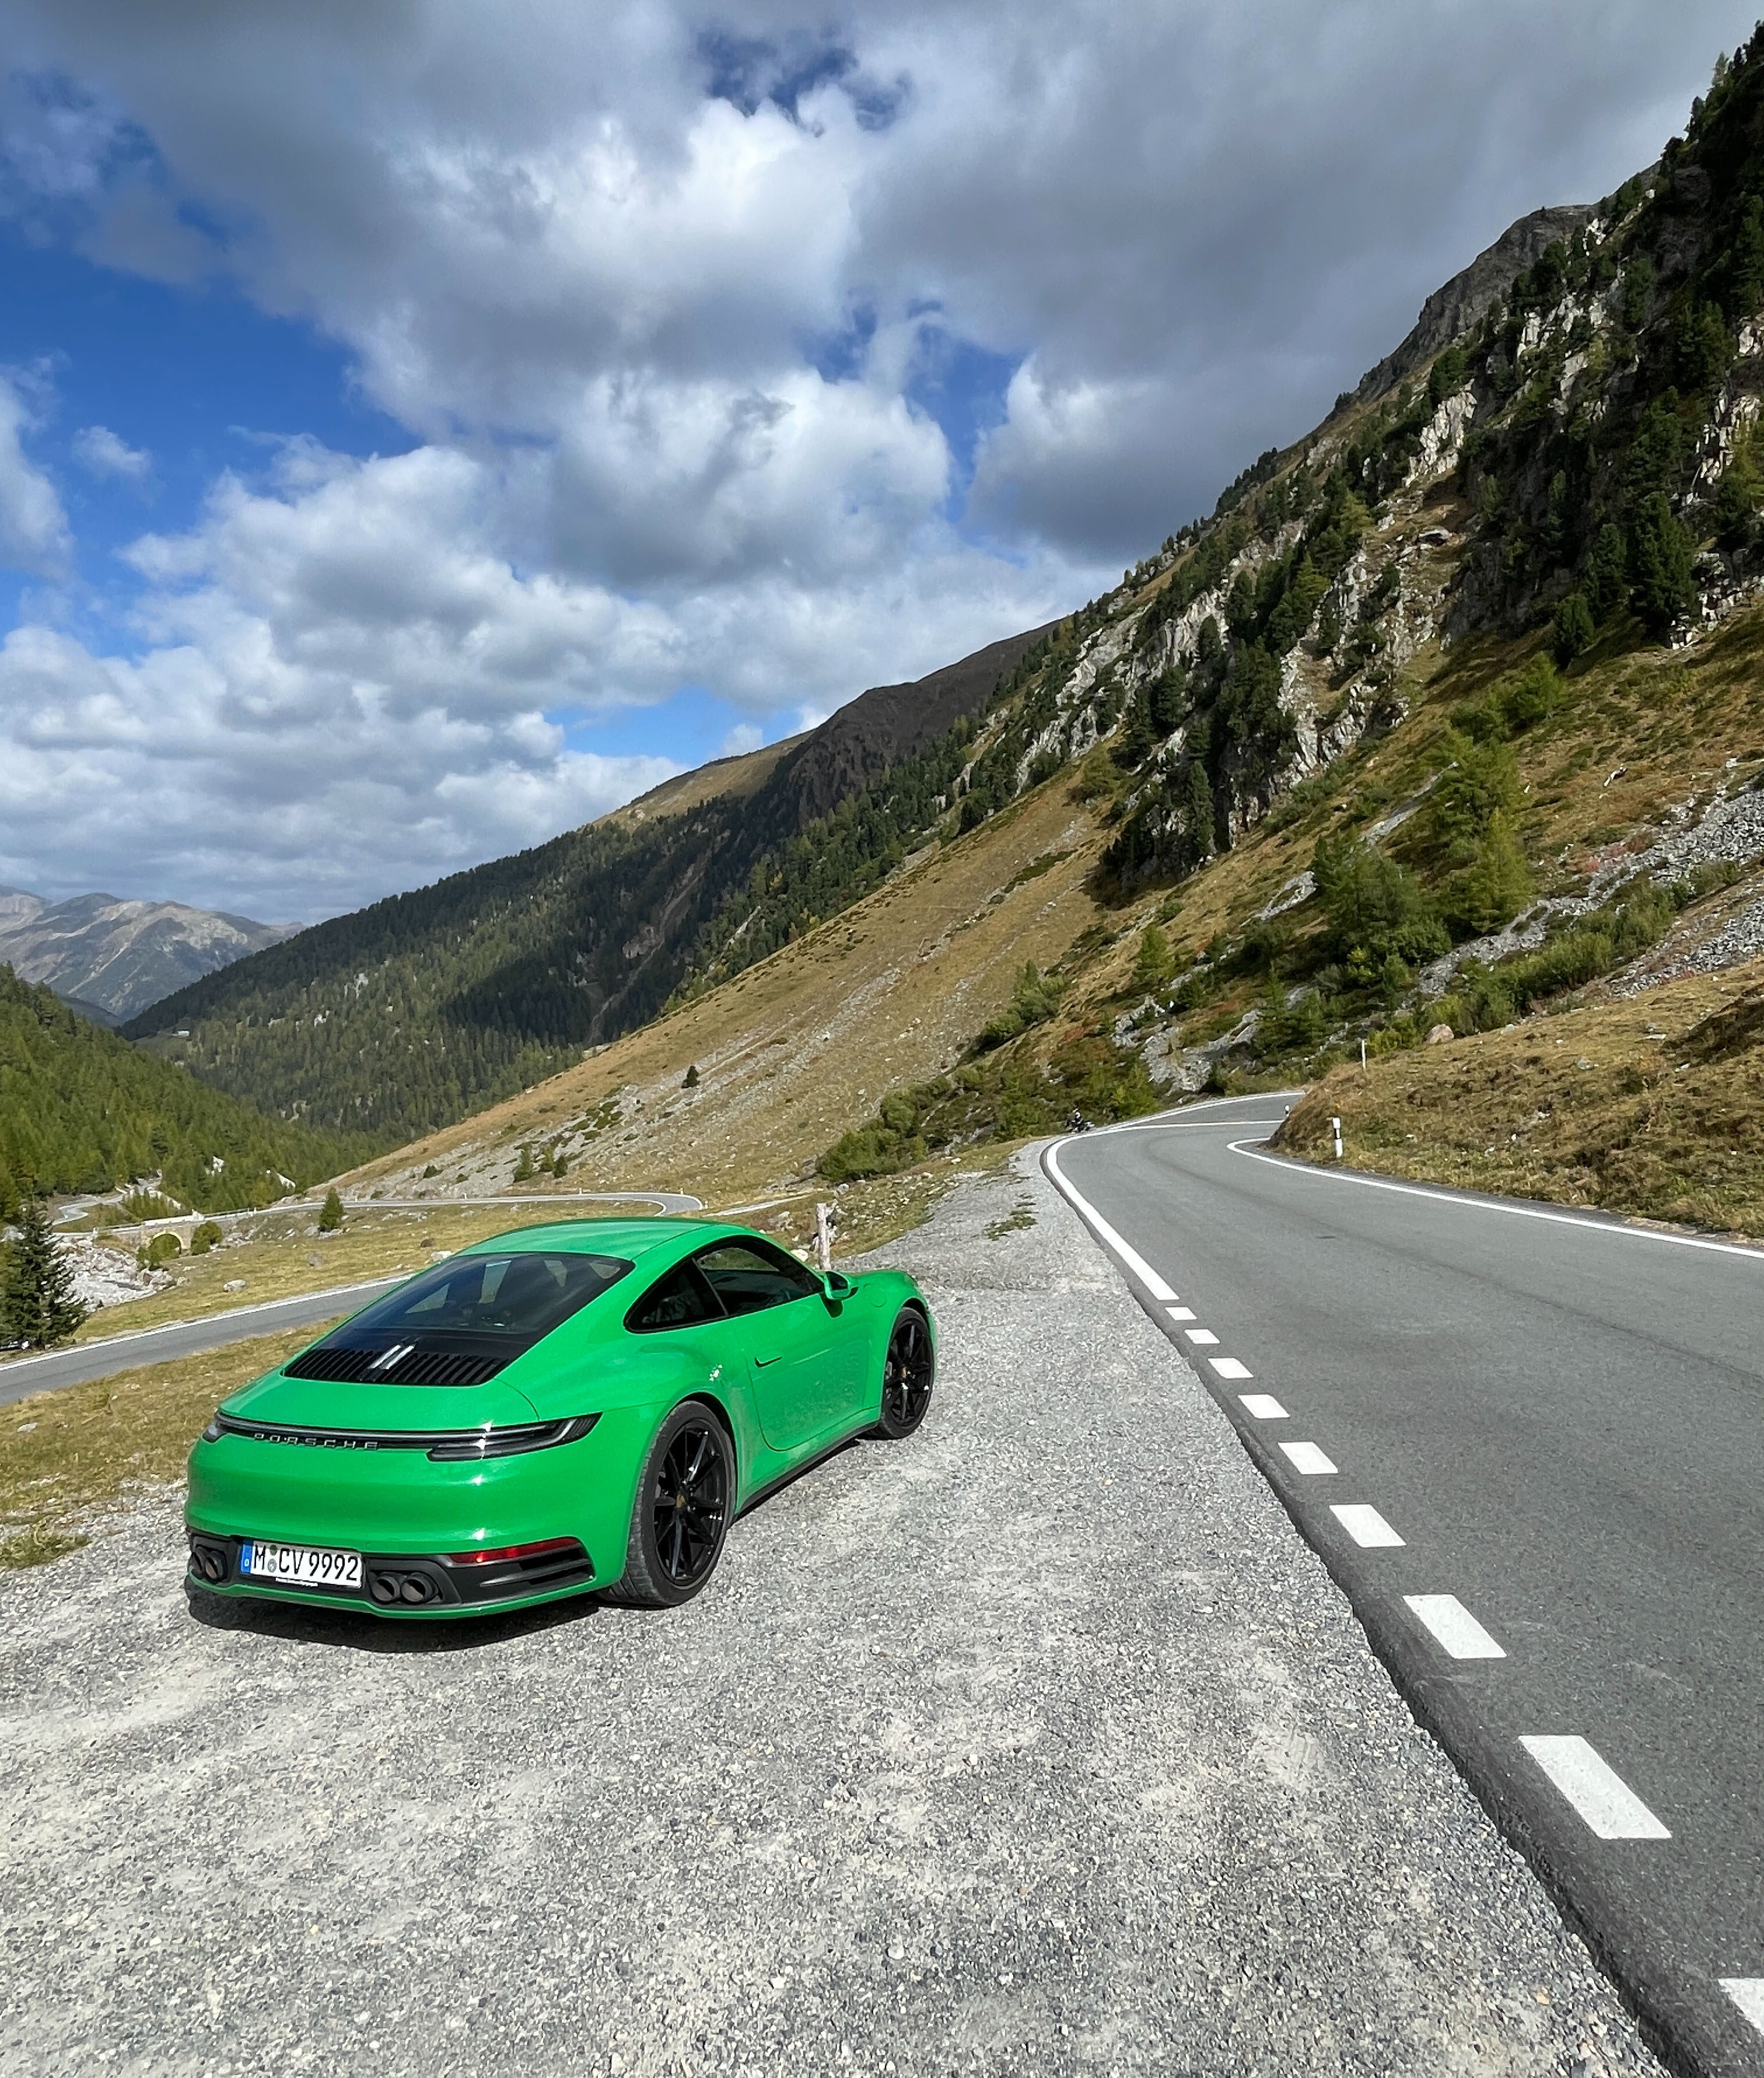 Porsche Grand Tour of the Alps - 8 Days